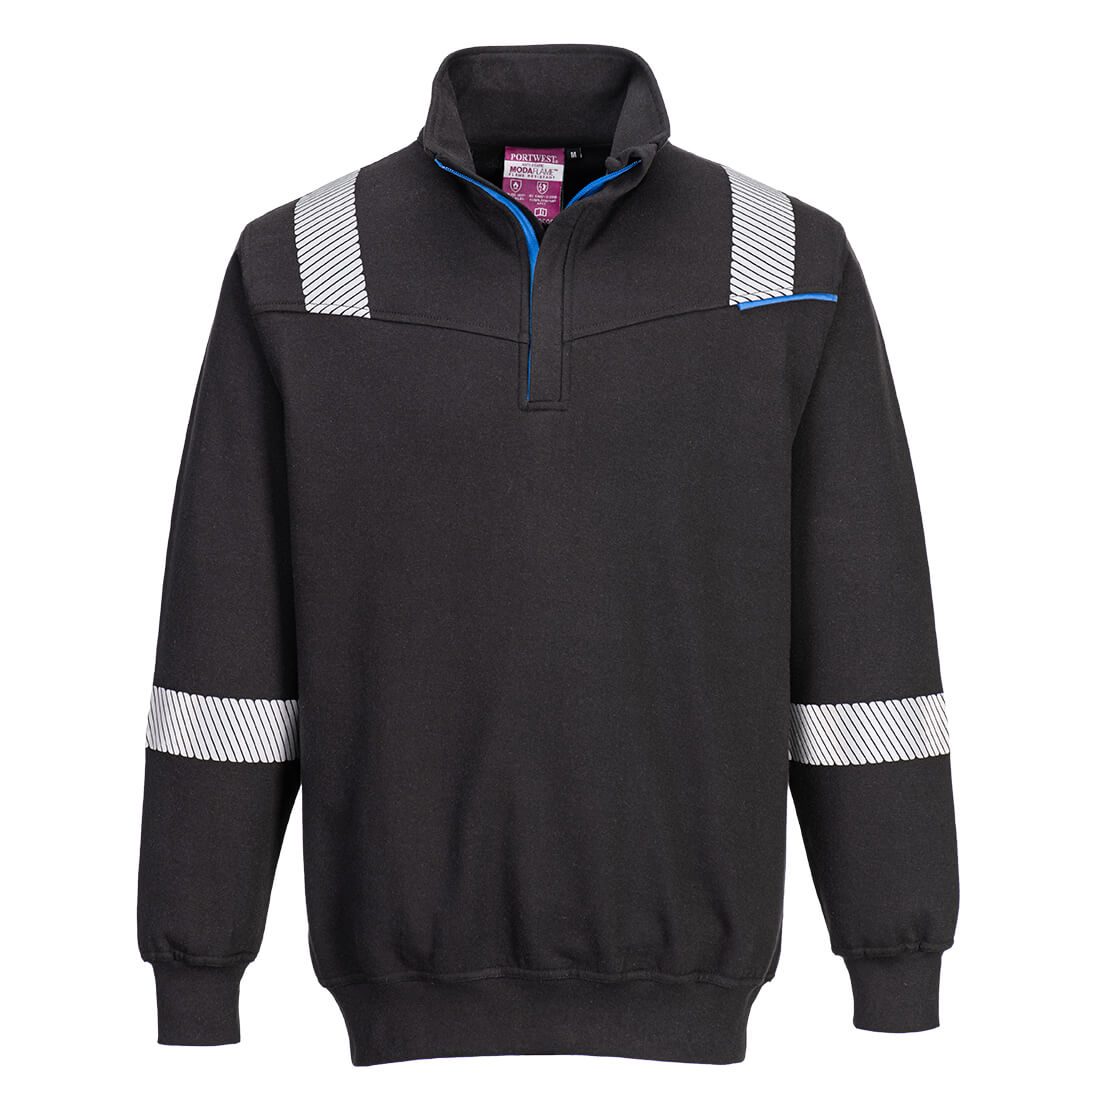 FR710 - WX3 Flame Resistant Sweatshirt